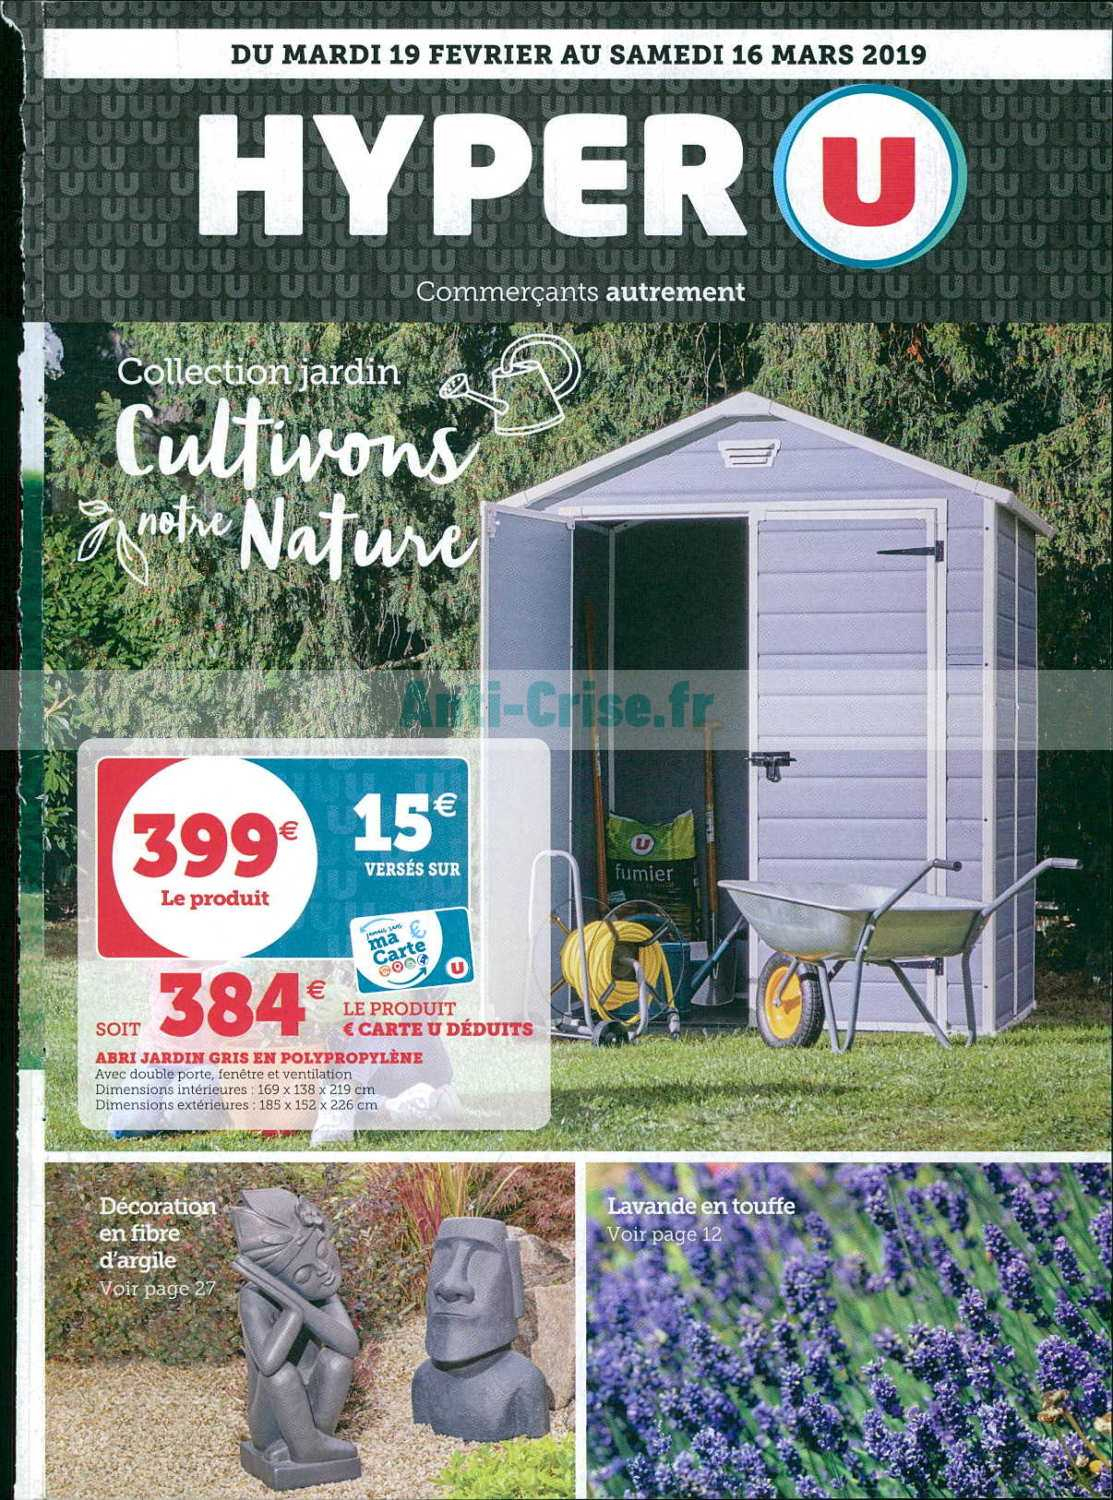 Catalogue Hyper U Du 19 Février Au 16 Mars 2019 (Jardin ... dedans Tonnelle De Jardin Super U